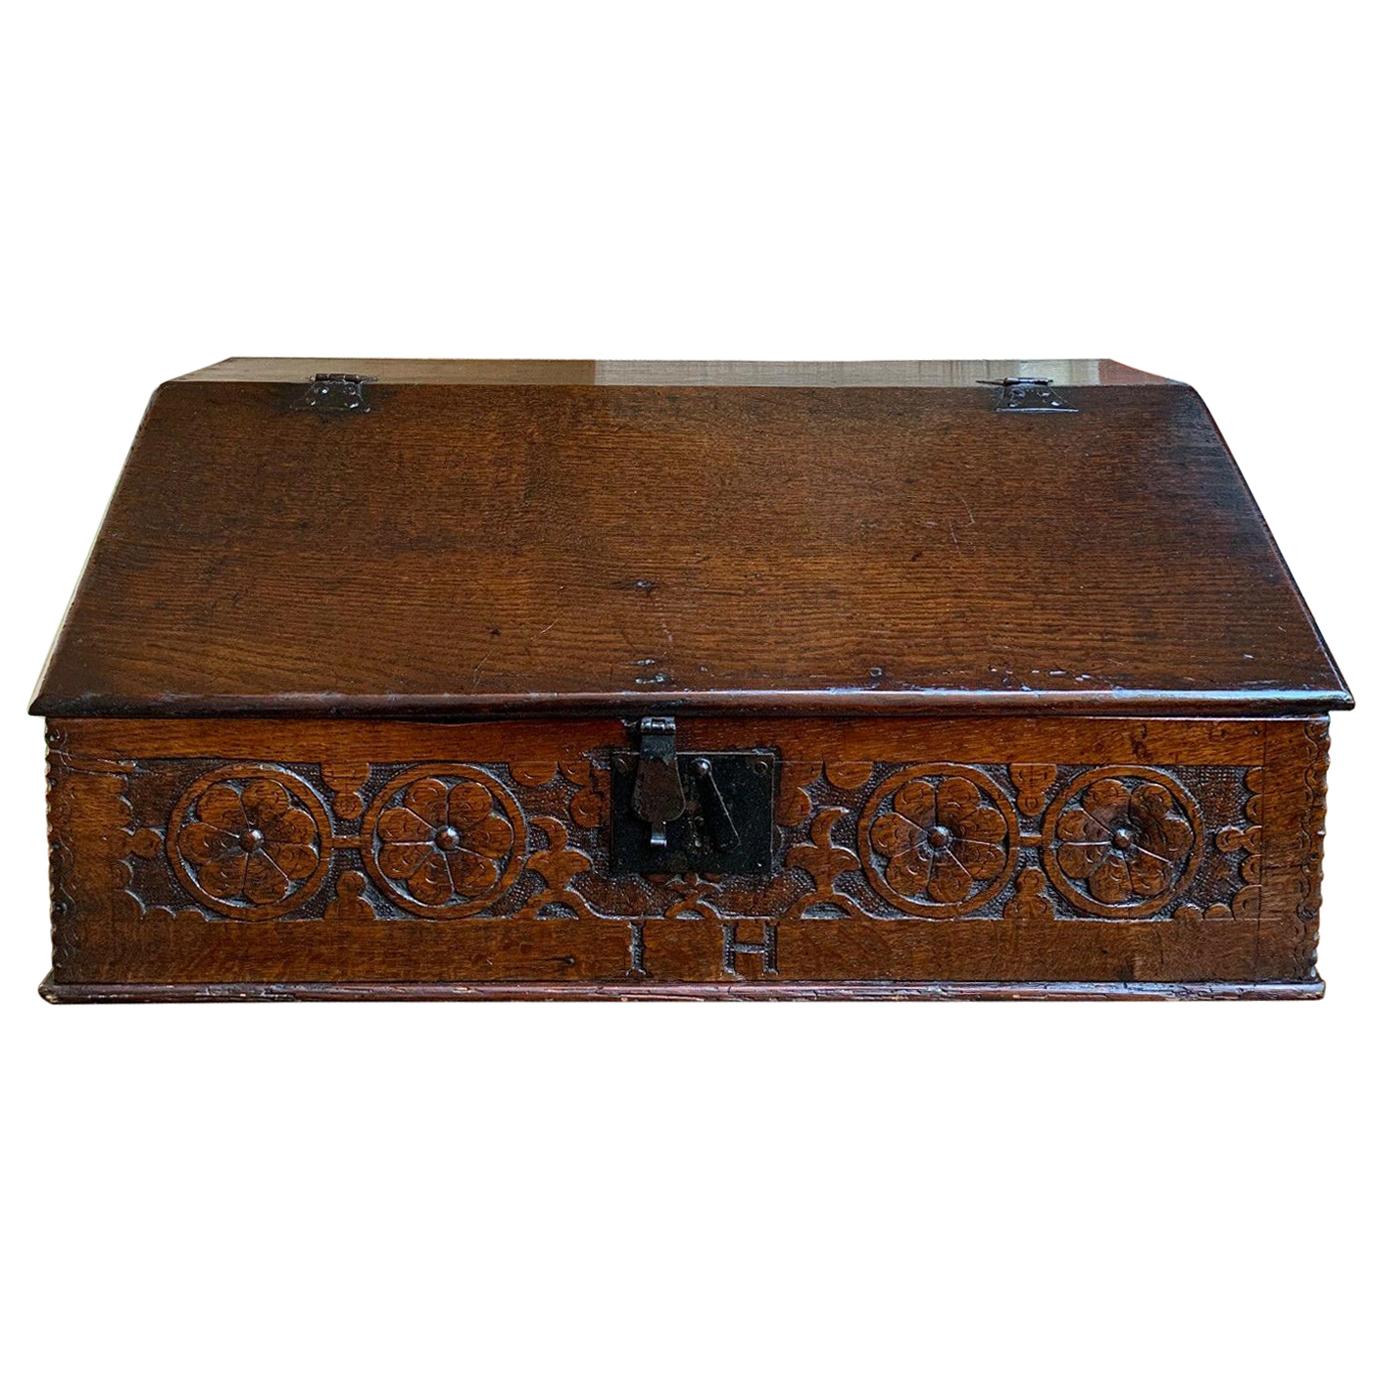 19th century English Pine Oak Bible Box Display Stand Desk Lectern Gothic